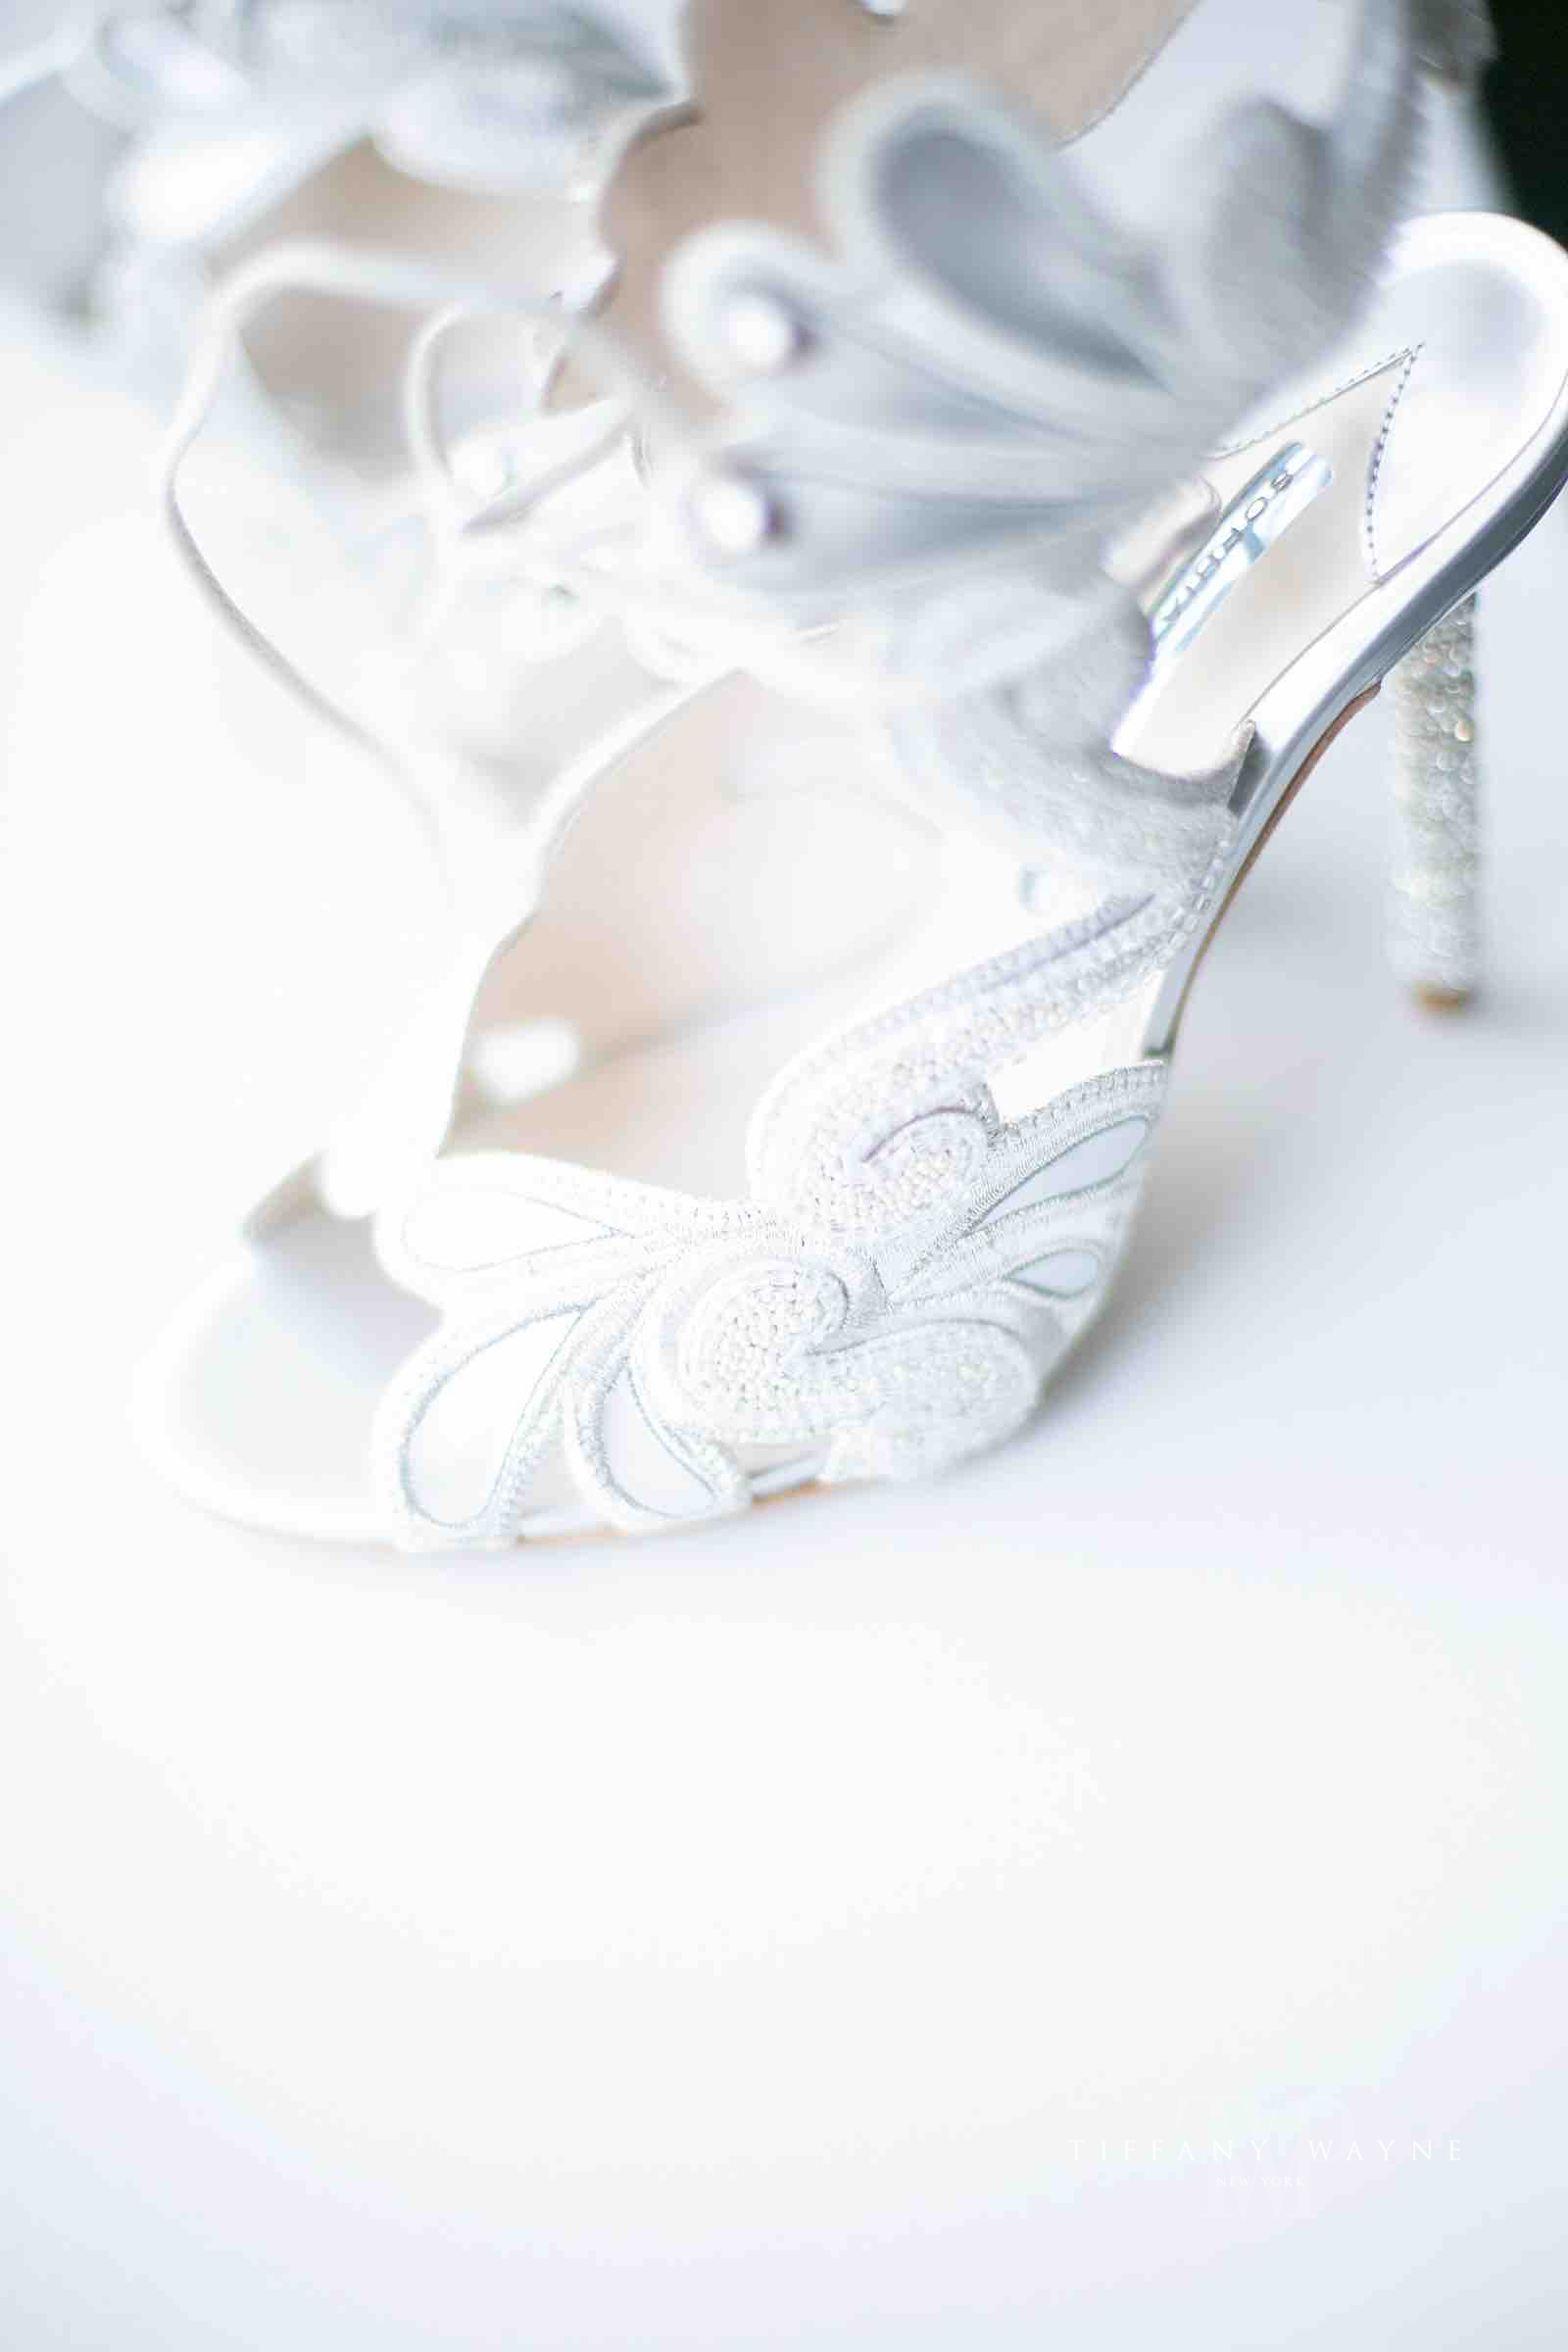 Tiffany Wayne Photography captures bridal details for Renaissance Hotel wedding day